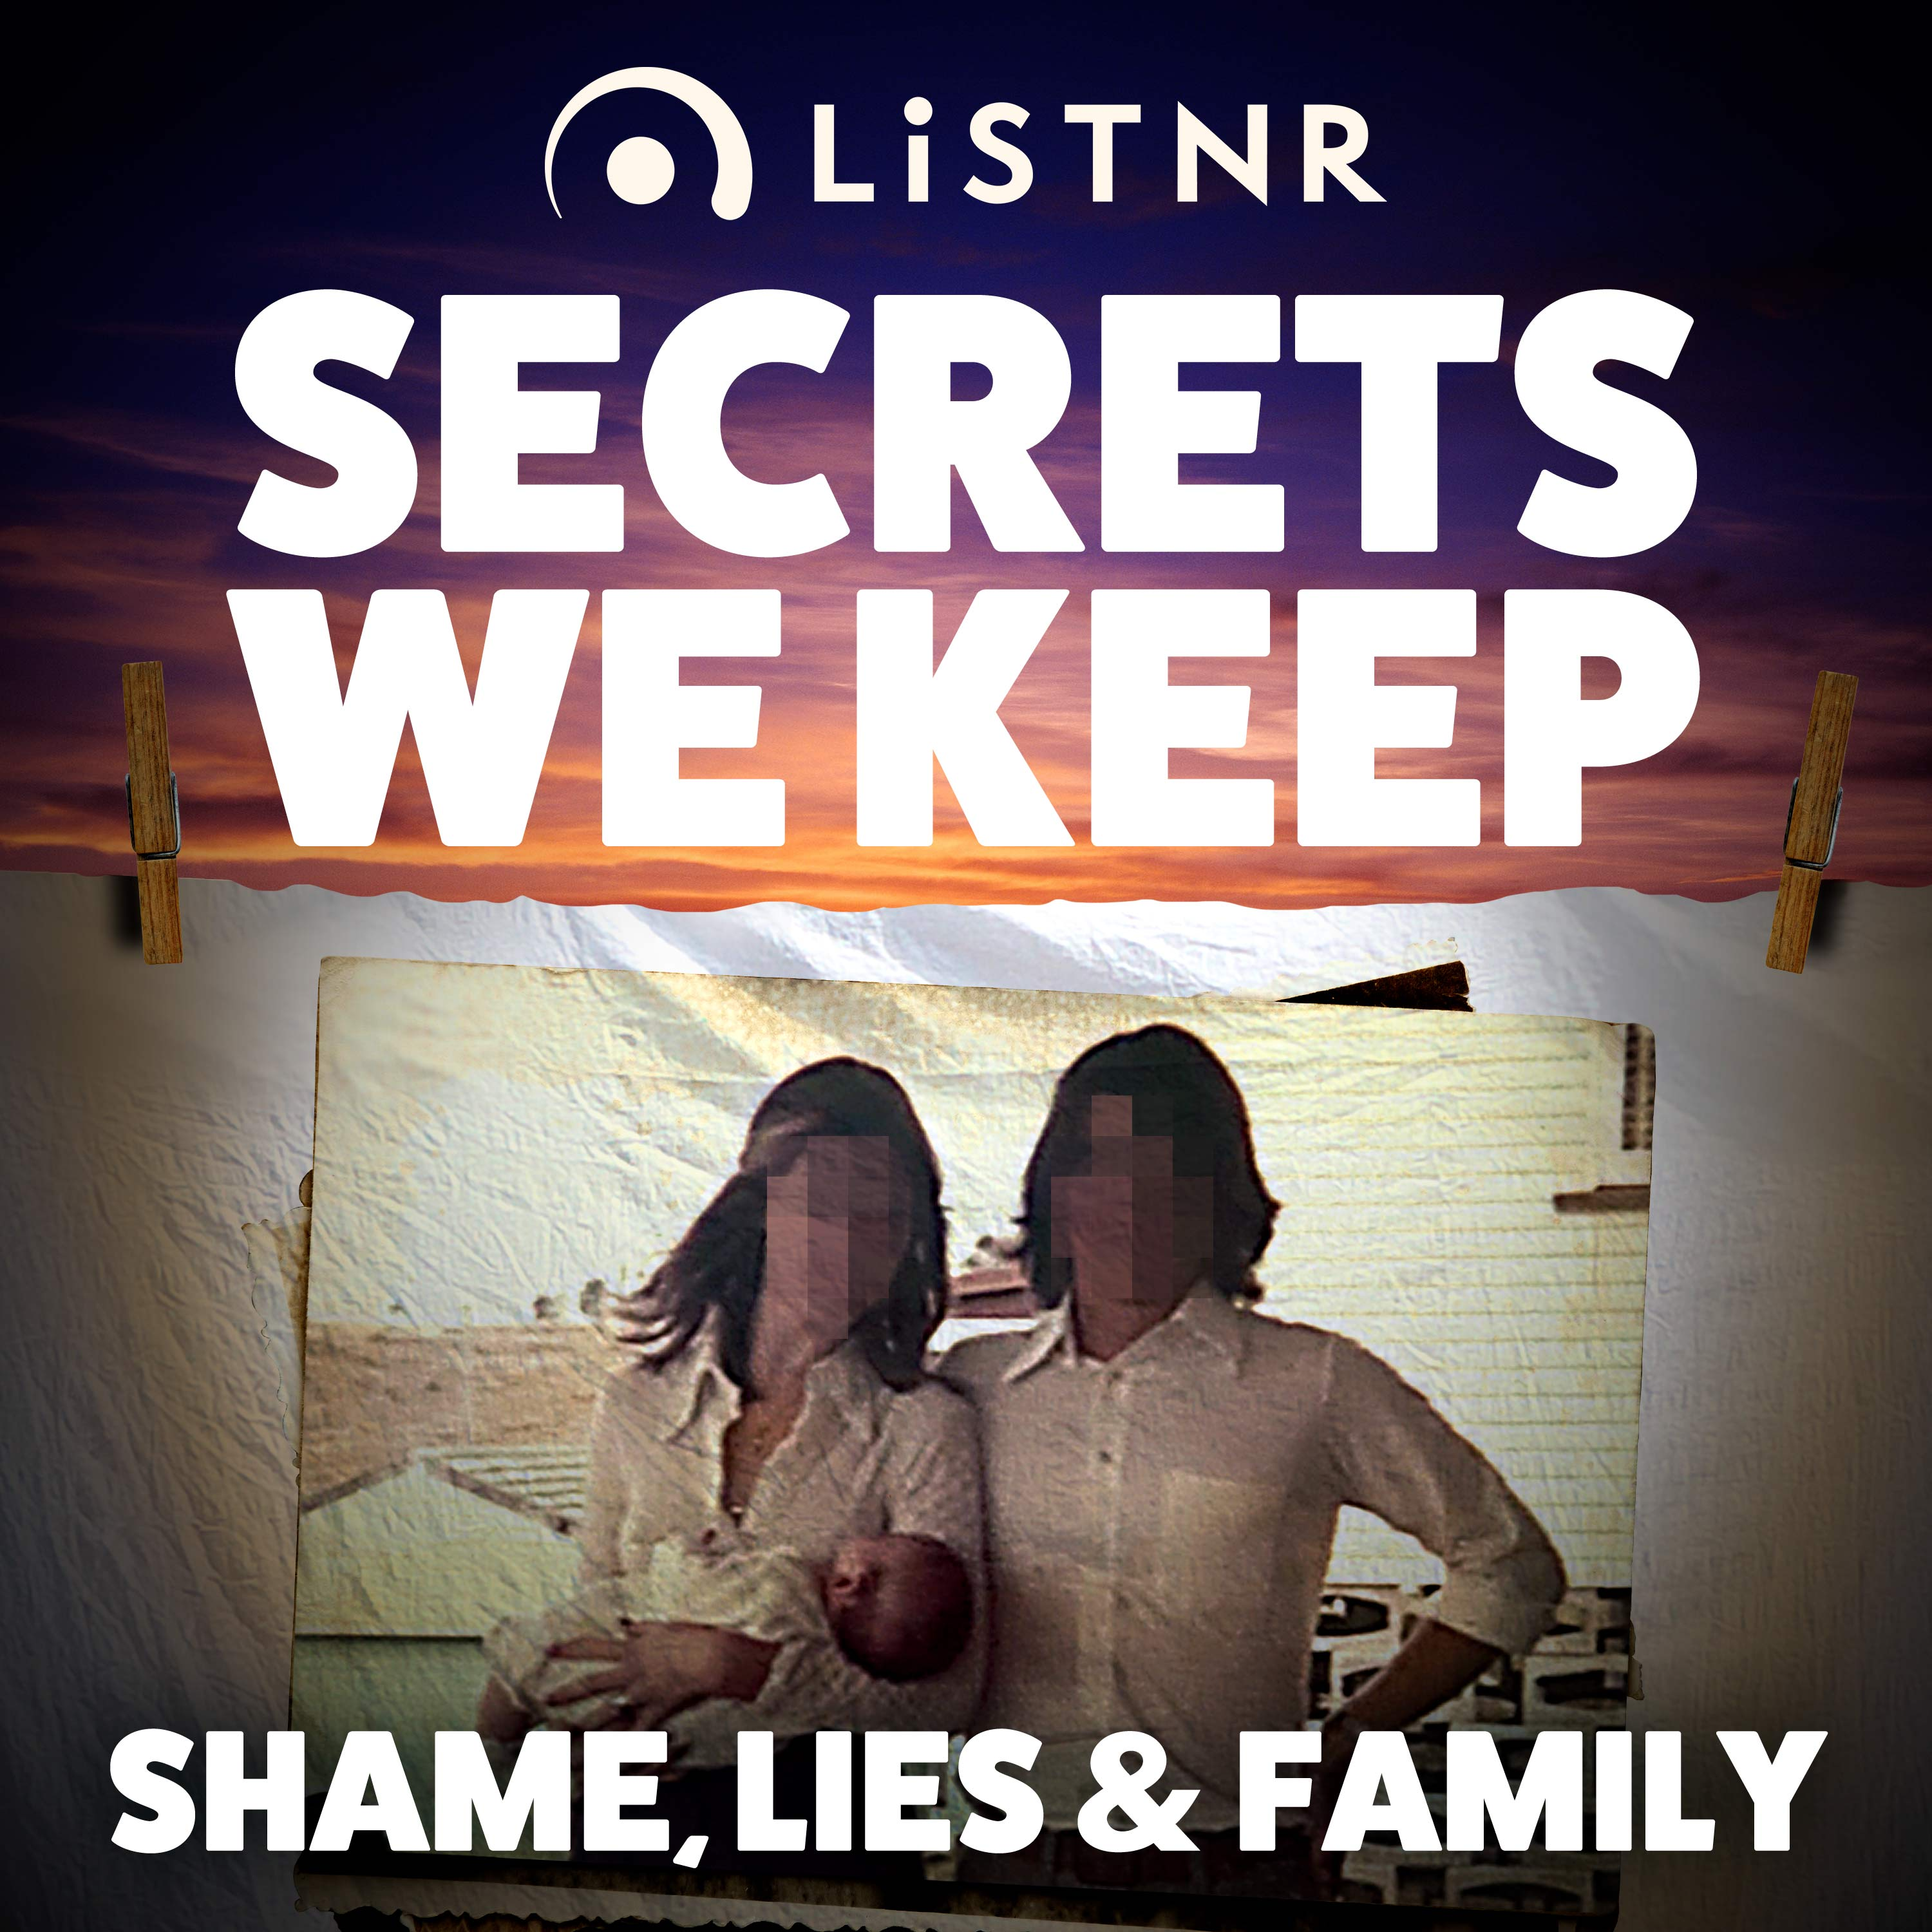 Shame, Lies & Family - Coming home